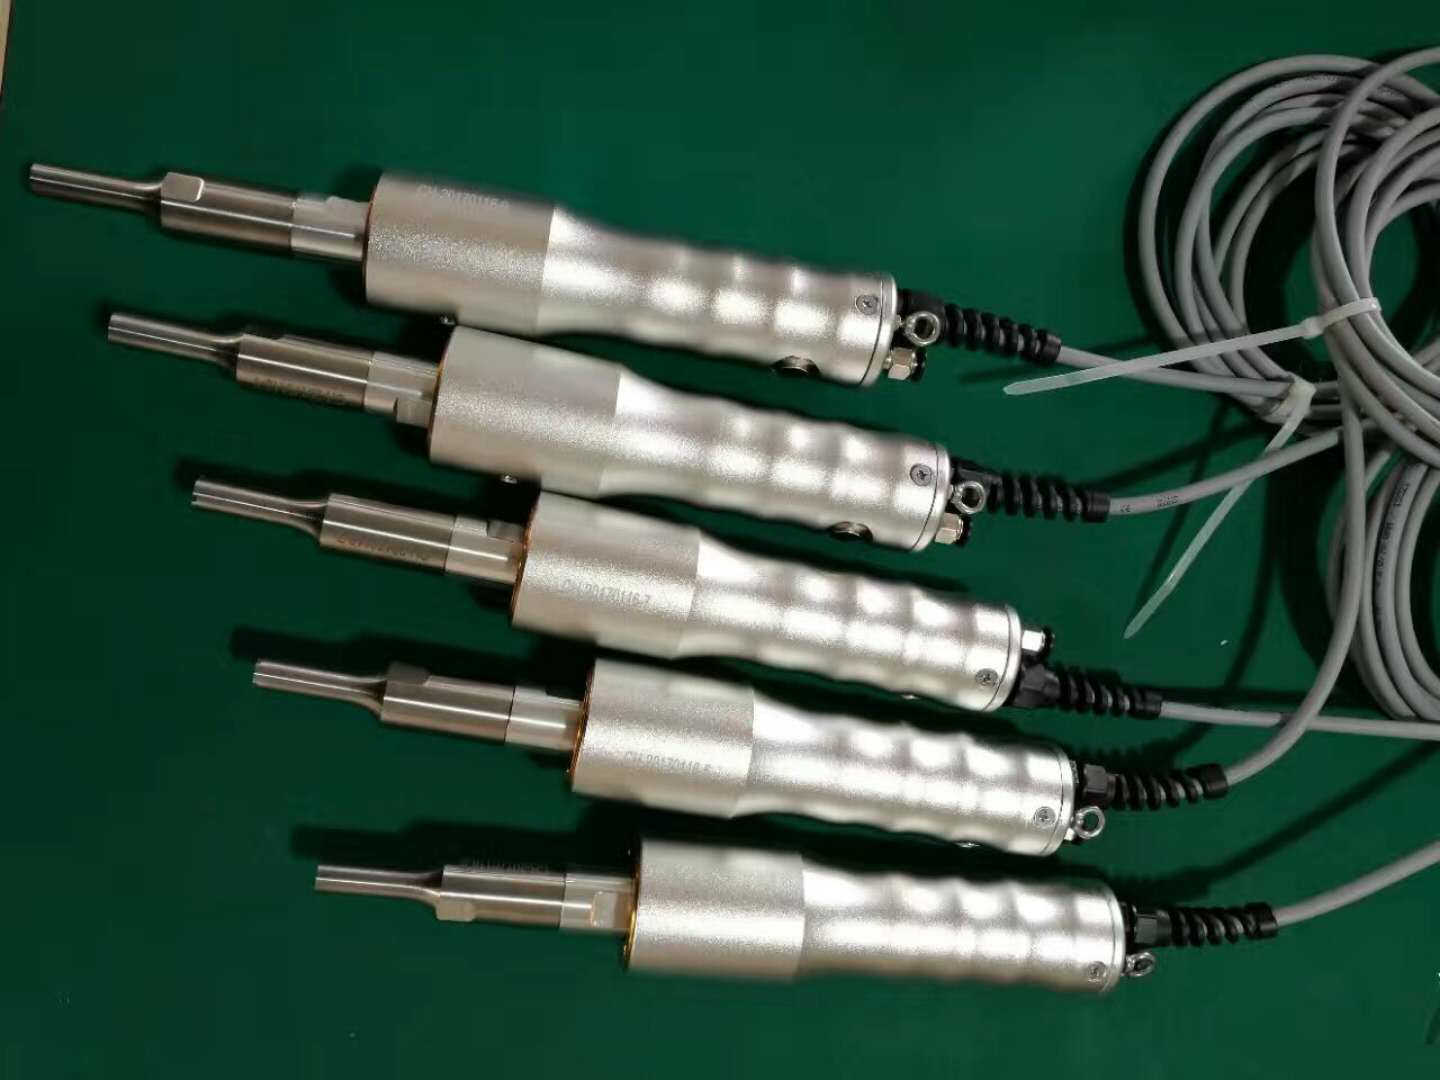   Ultrasonic equipment